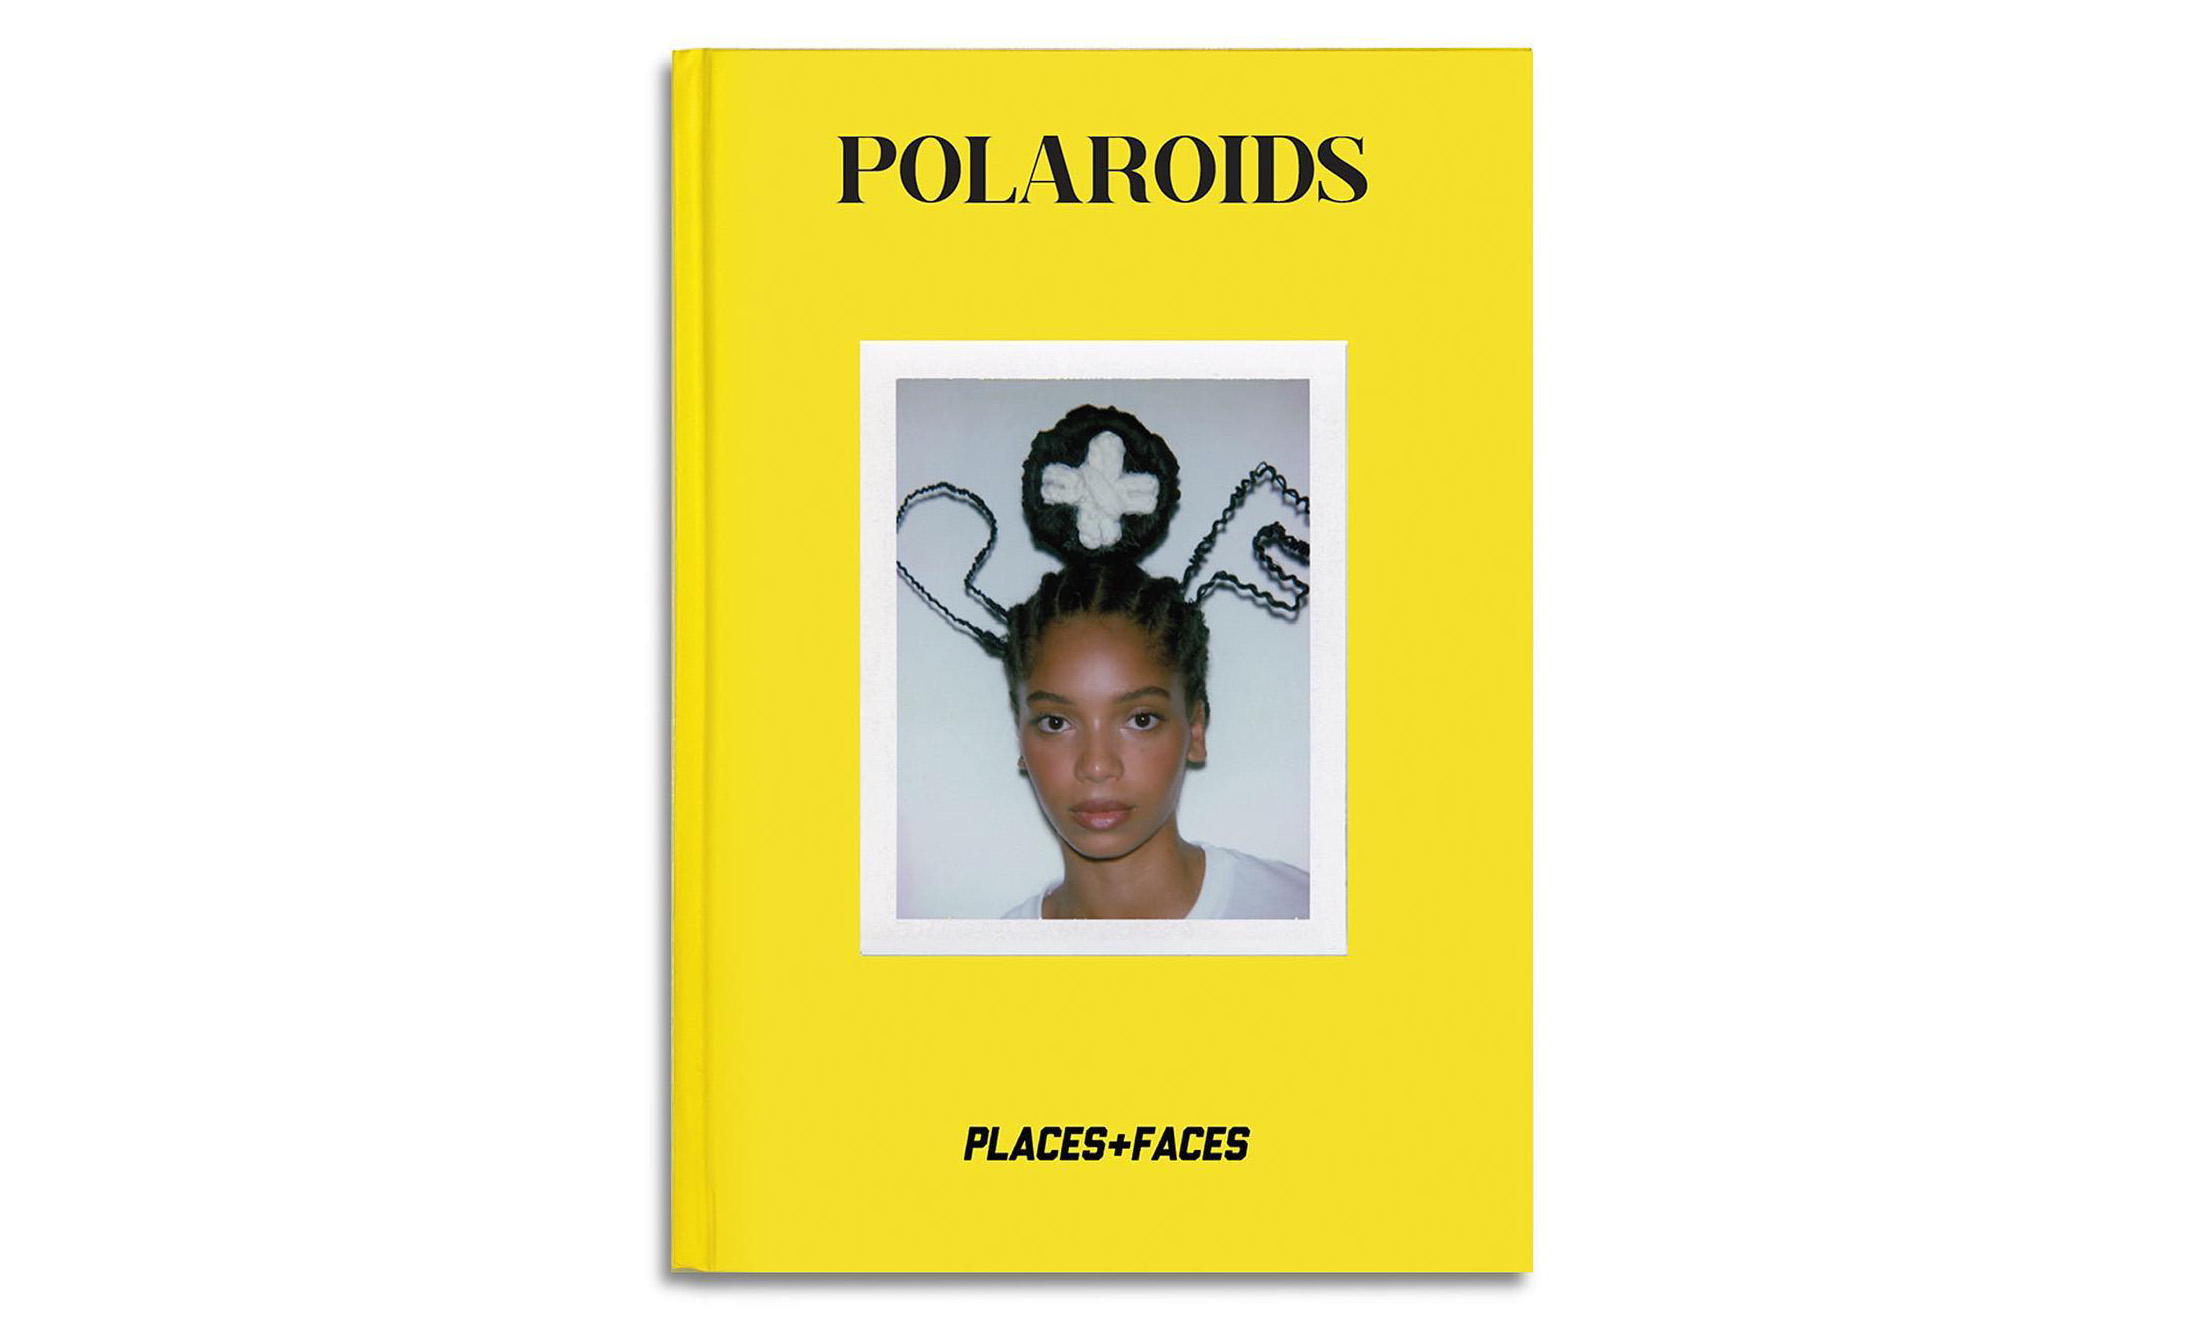 PLACES+FACES 推出首本品牌书籍《POLAROIDS》